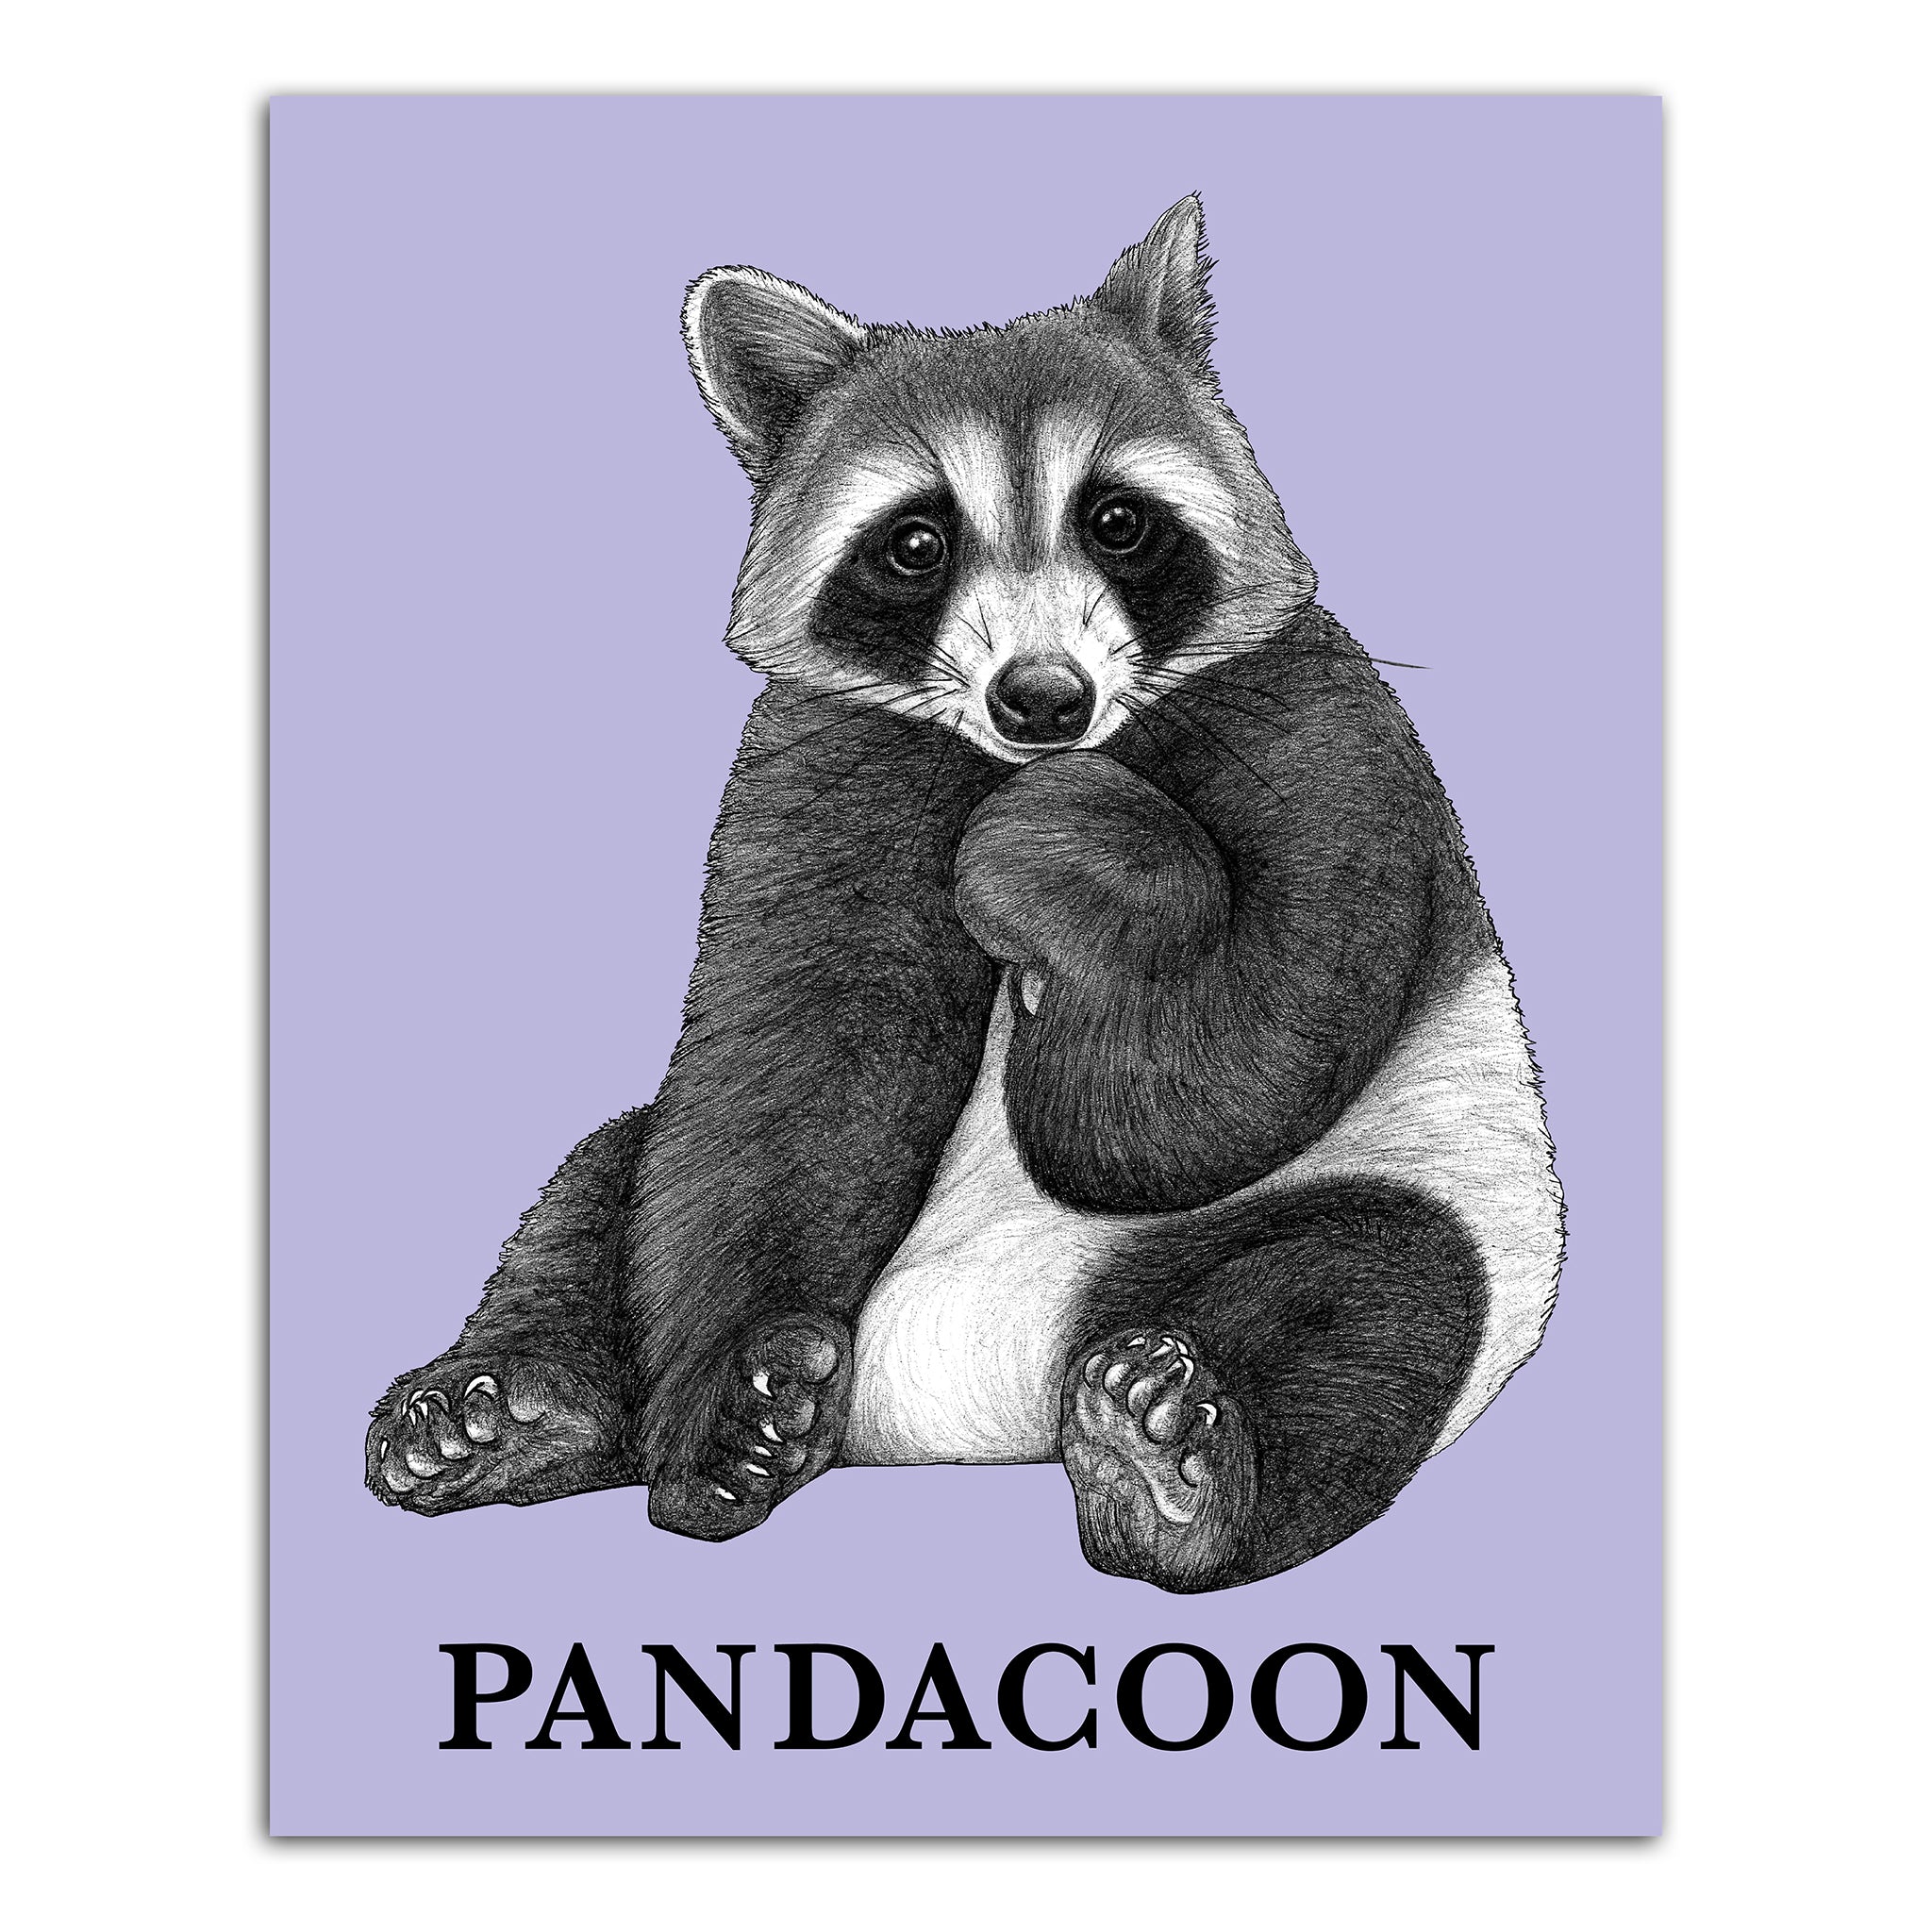 Pandacoon 8x10" Color Print